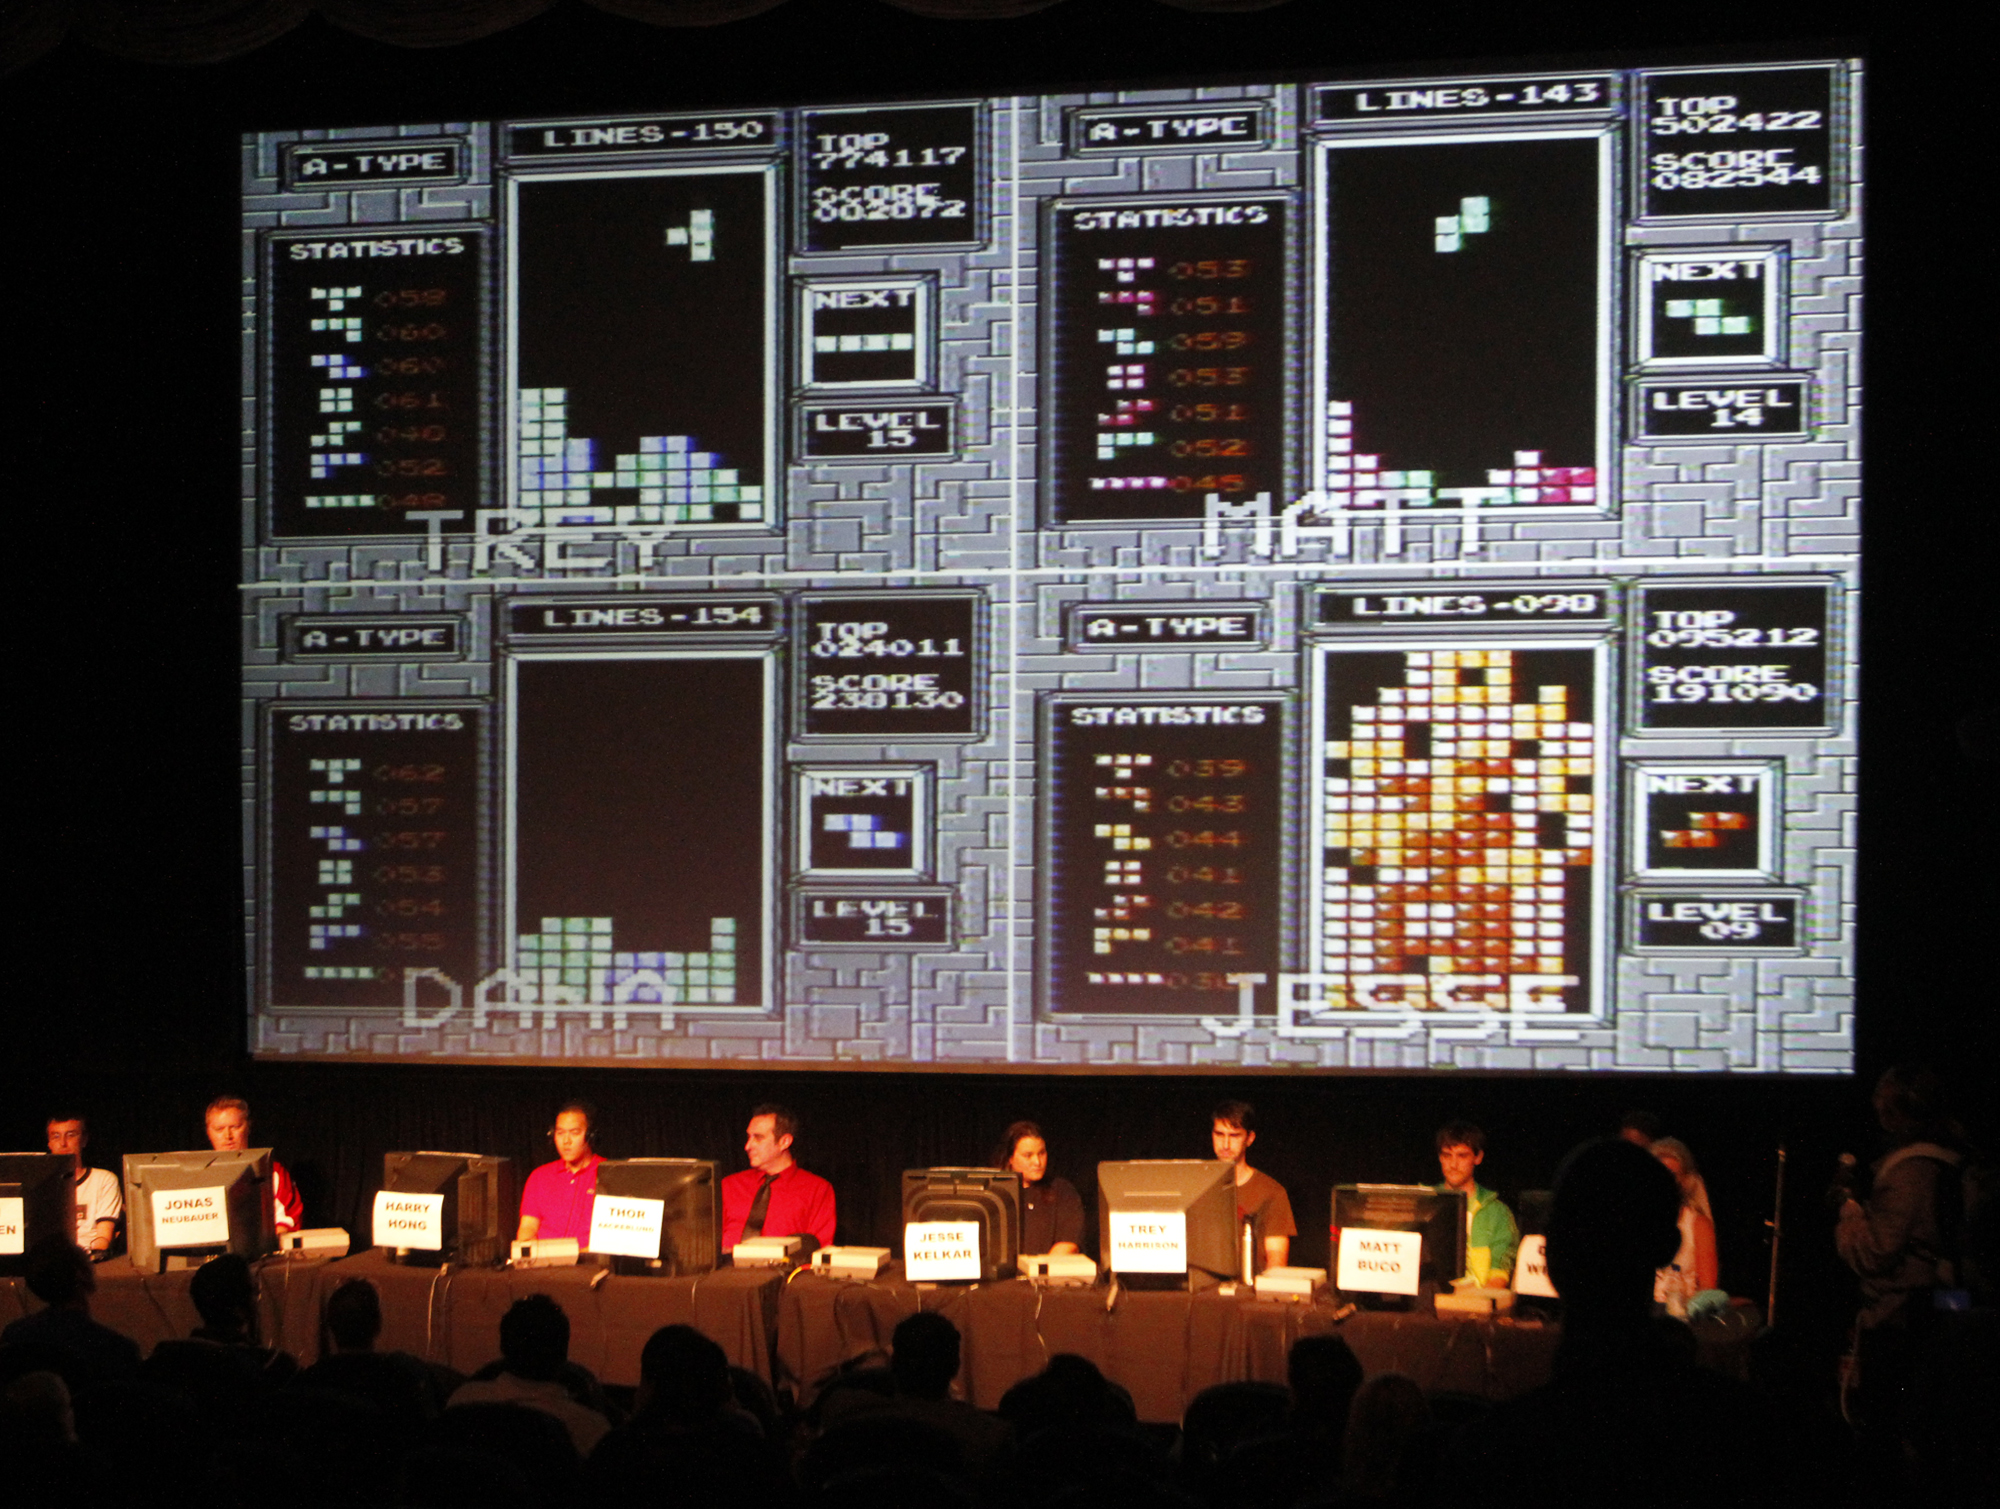 High Score features a Tetris tournament